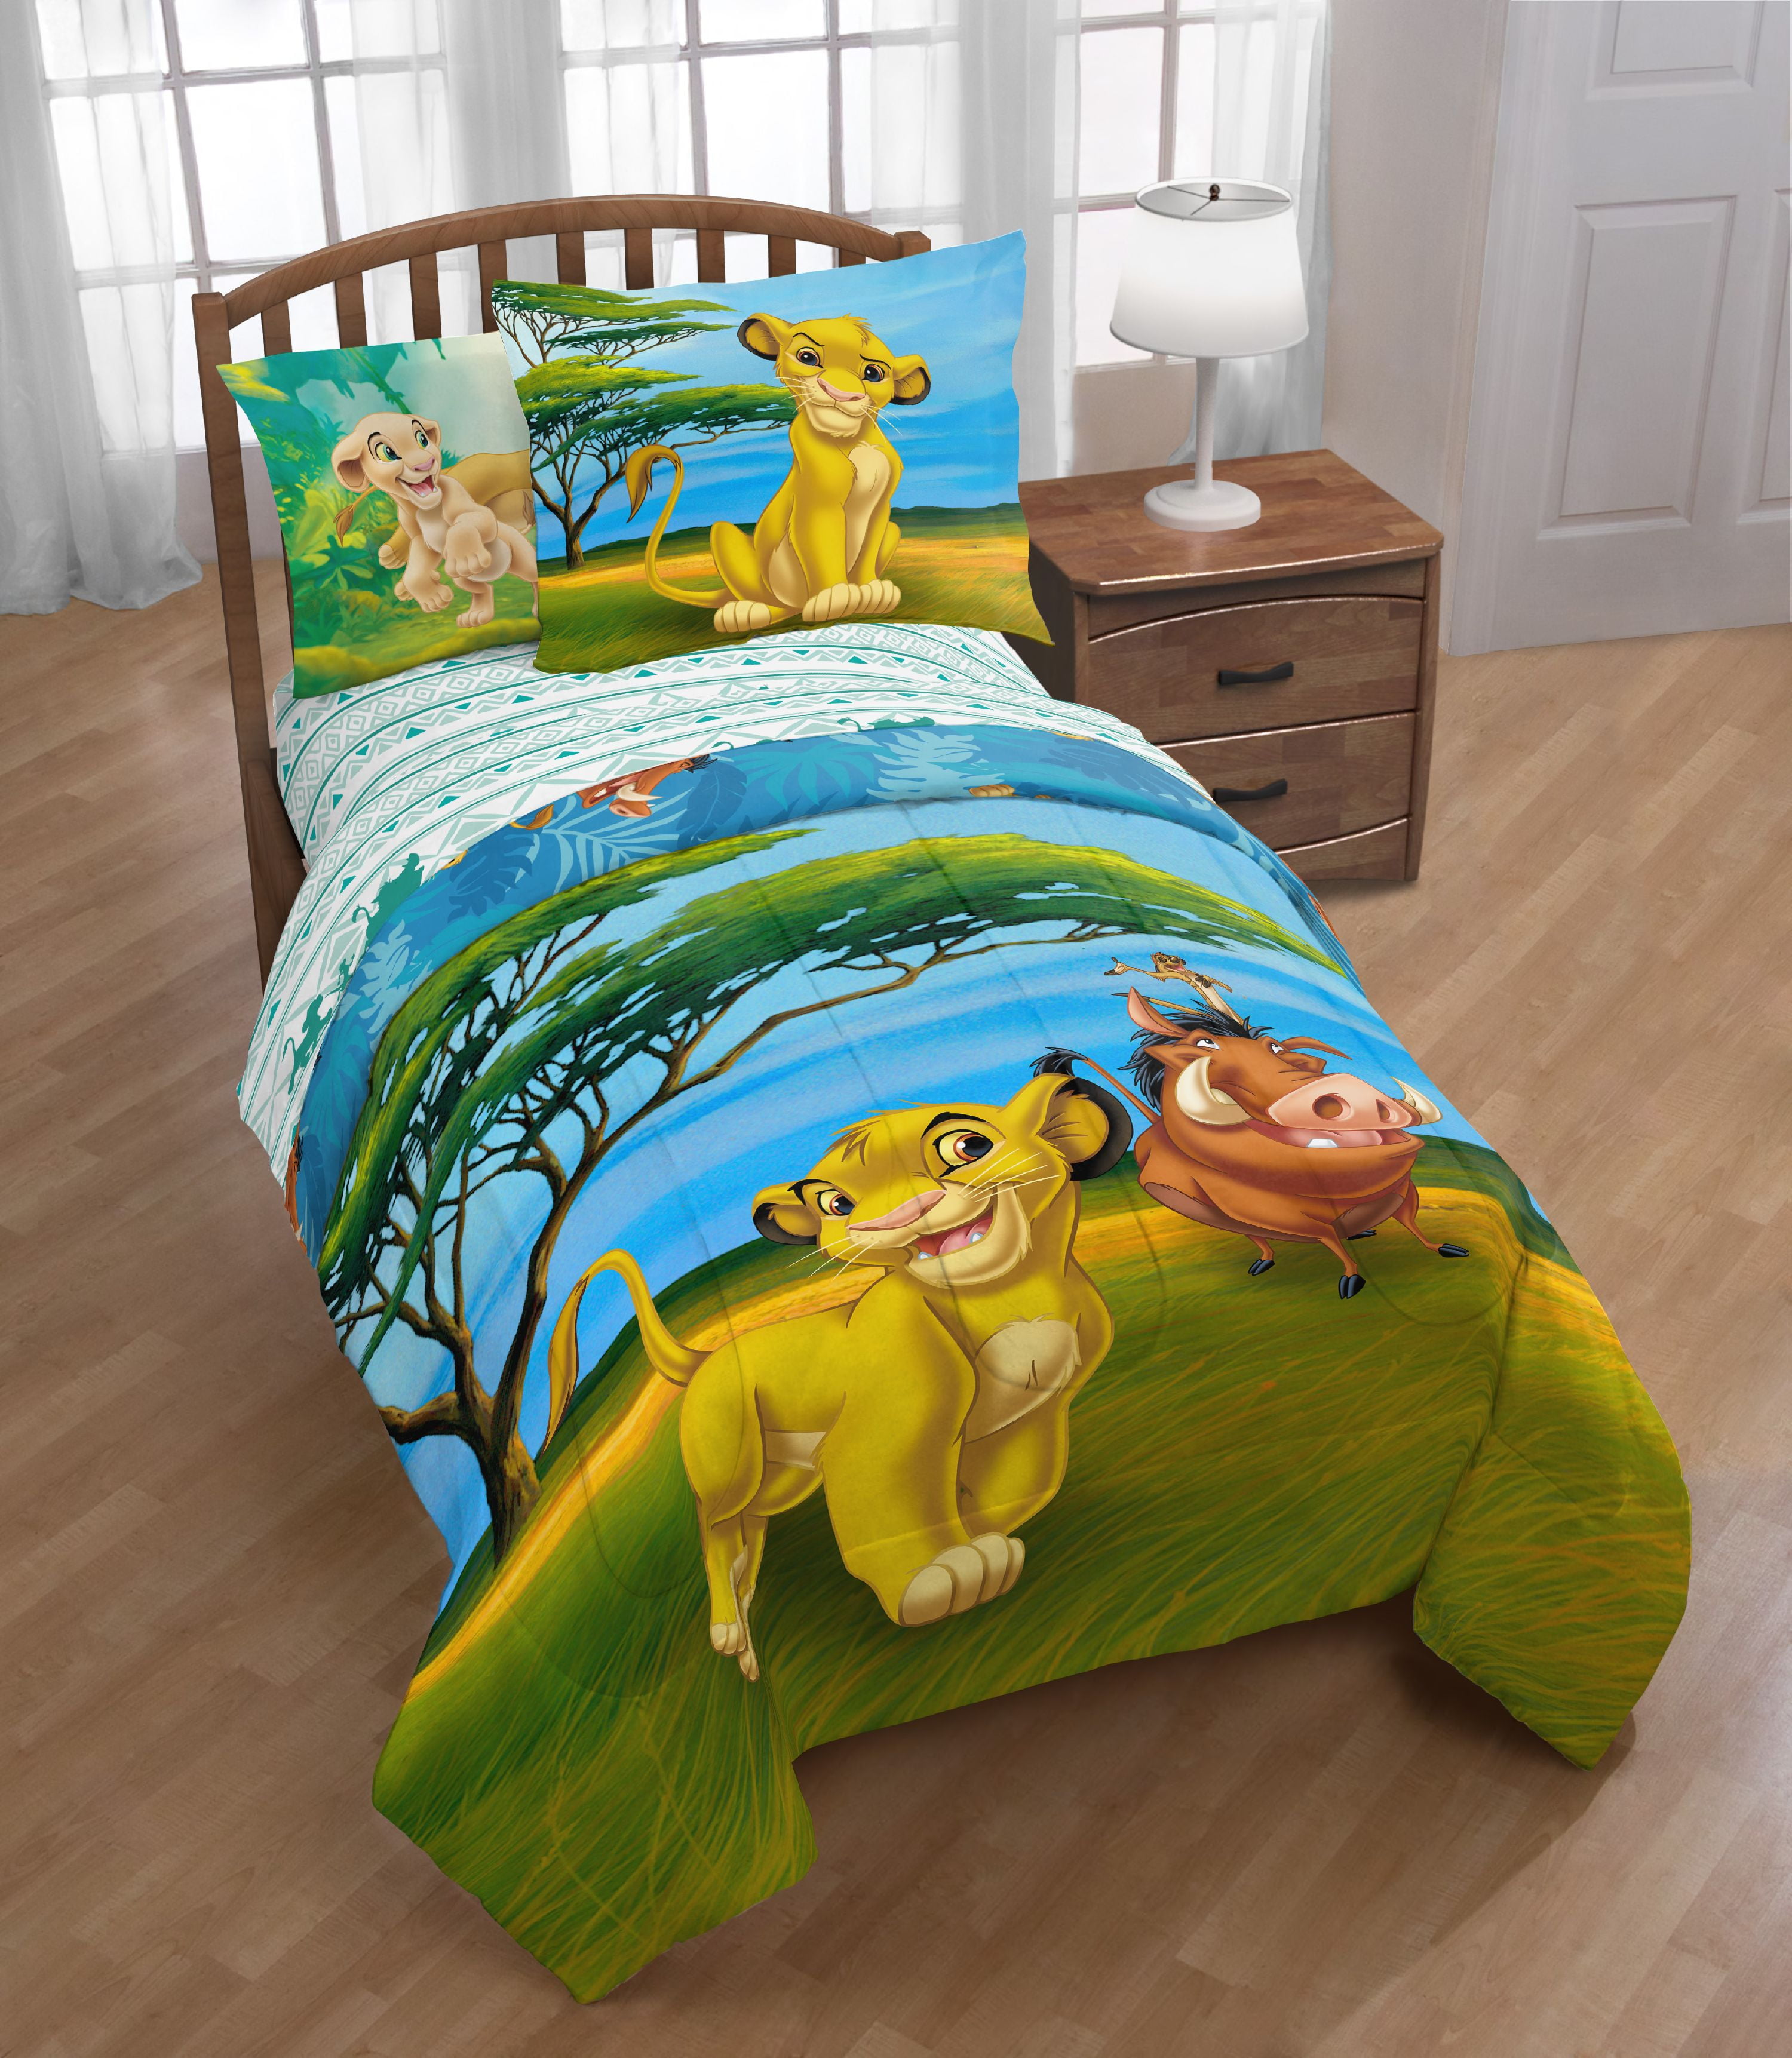 Disney The Lion King Twin Bedding Set Comforter Sheets Pillowcase 